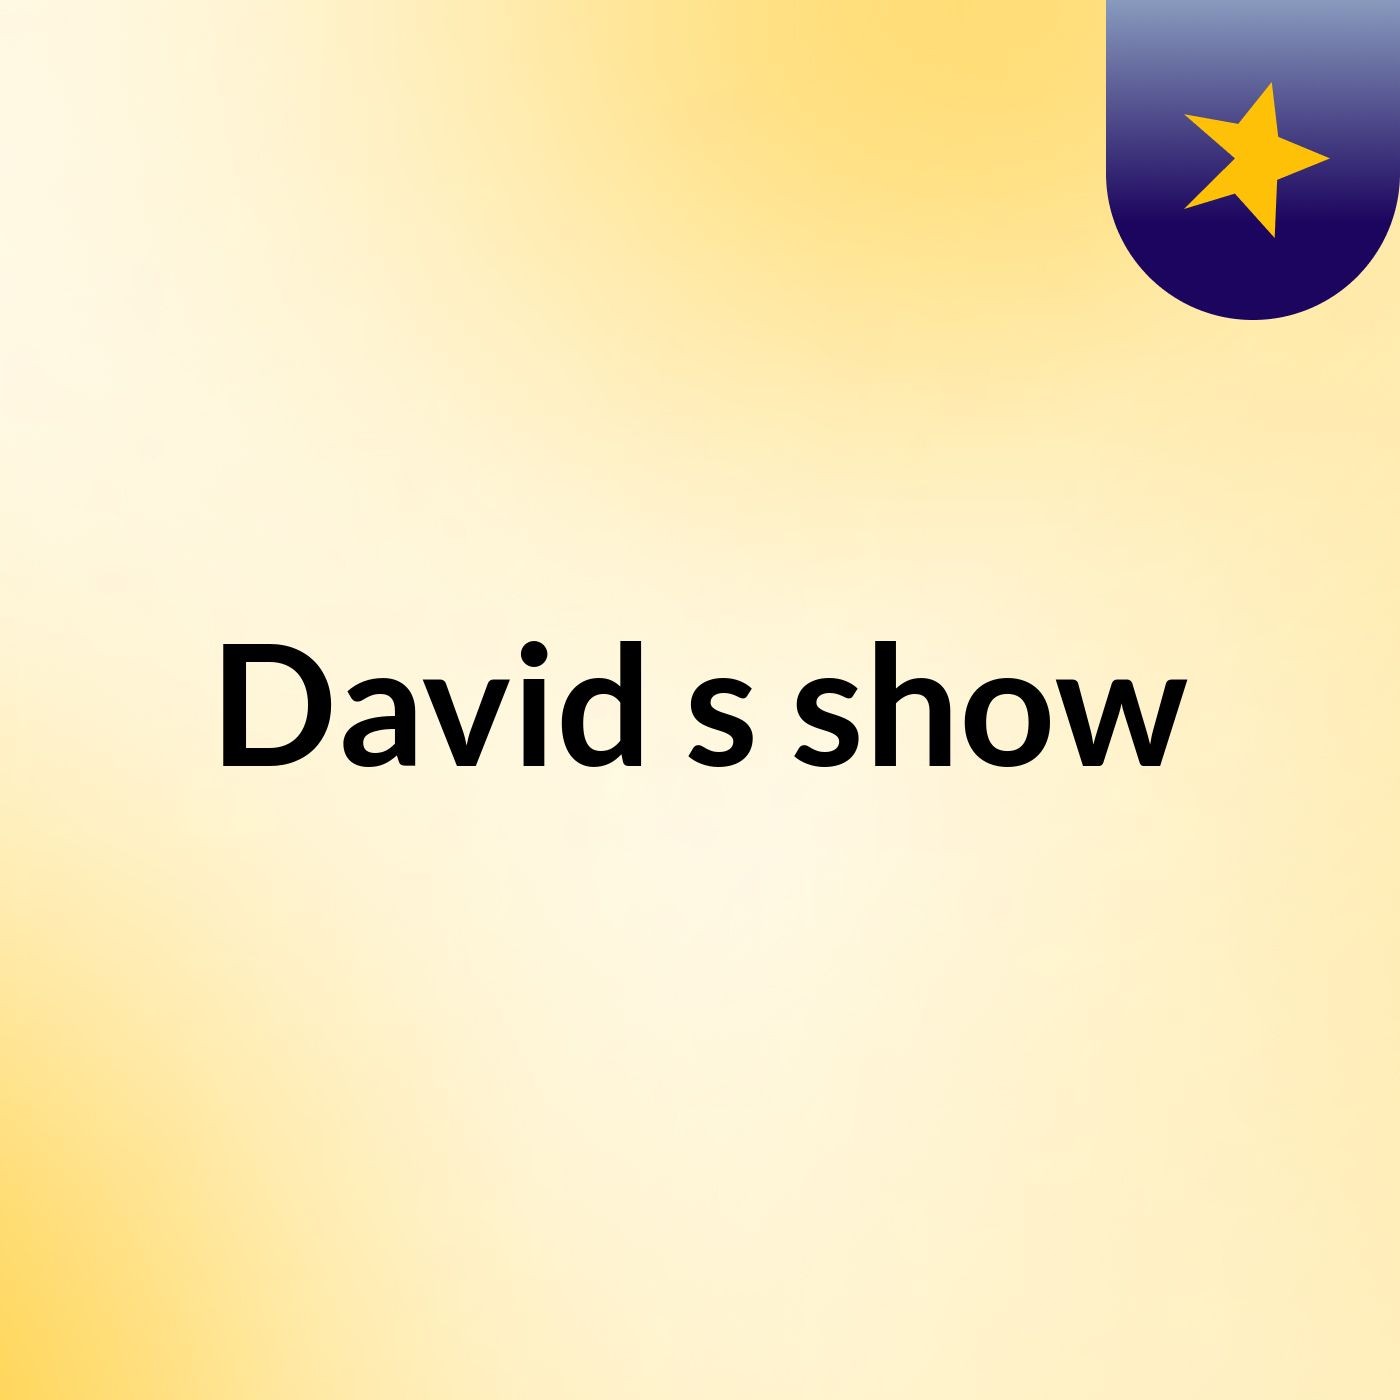 David's show